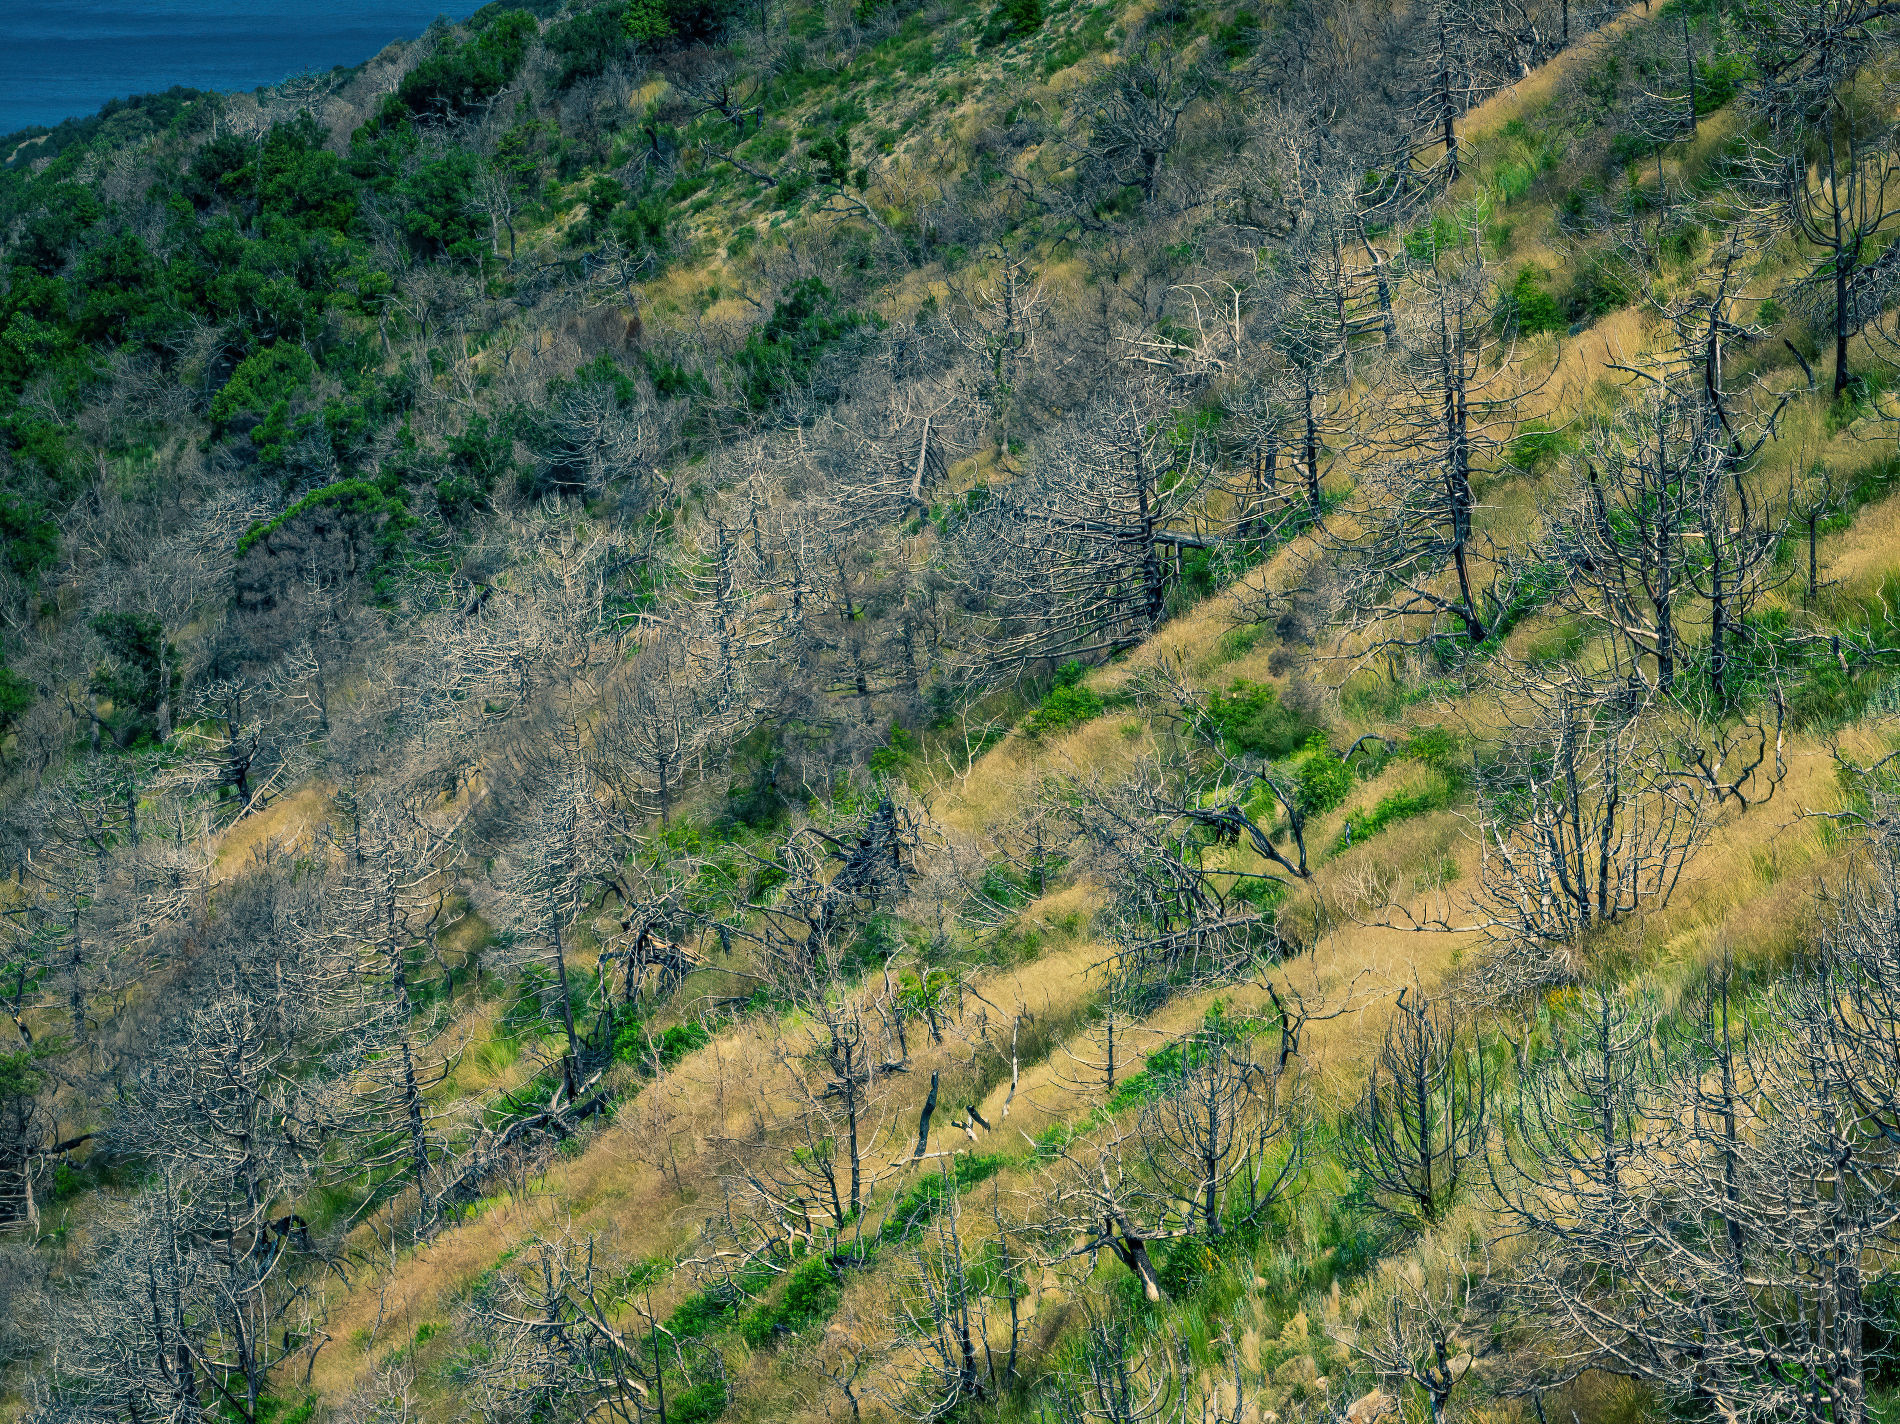 4900 деревьев сгорело на Утрише в августе 2020 года © Фото Антона Быкова, Юга.ру